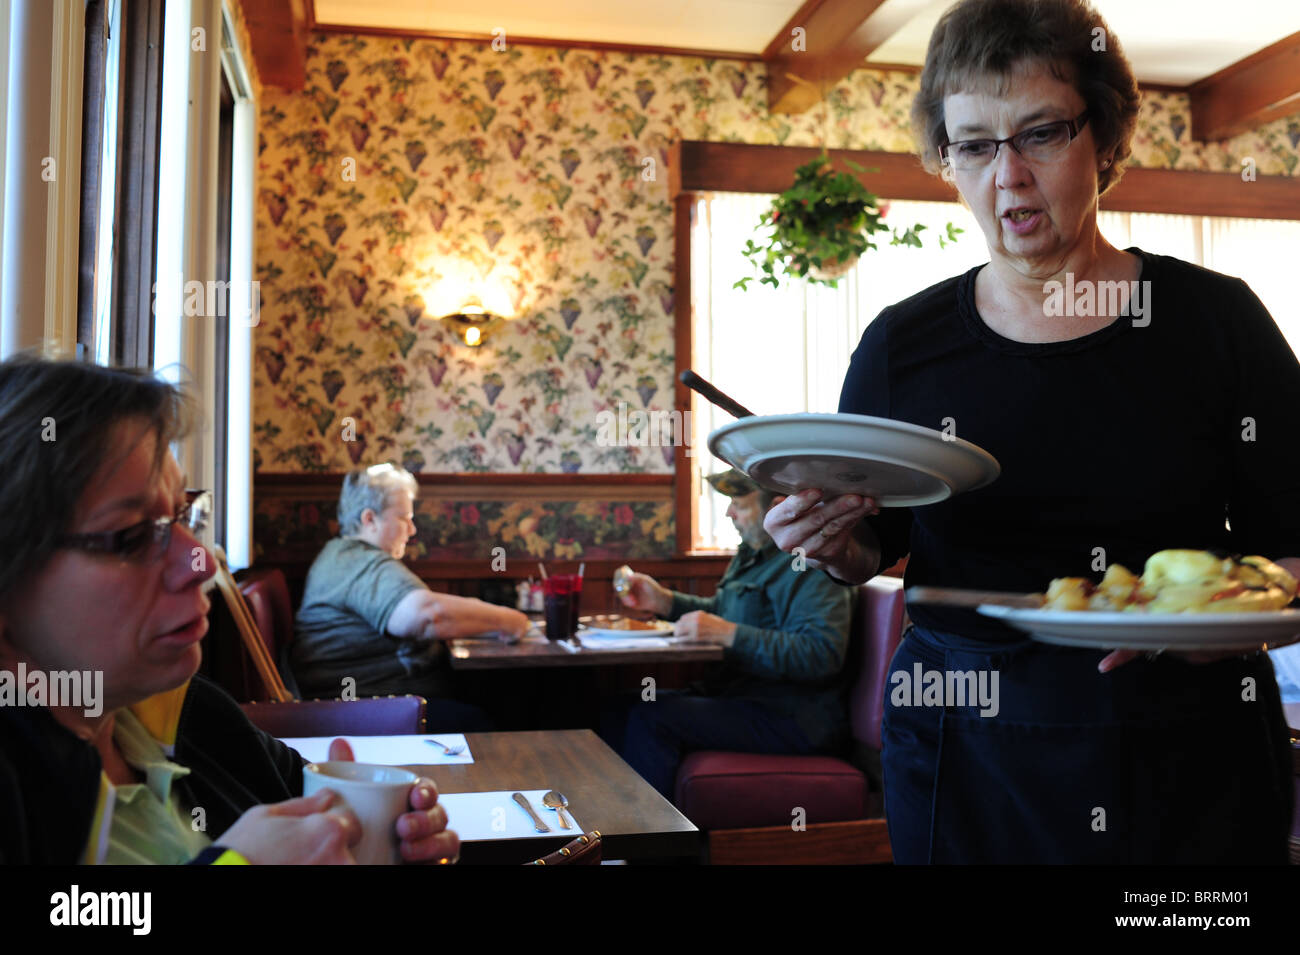 USA New York Naples NY Finger Lakes Region waitress serving breakfast at The Redwood Restaurant Stock Photo